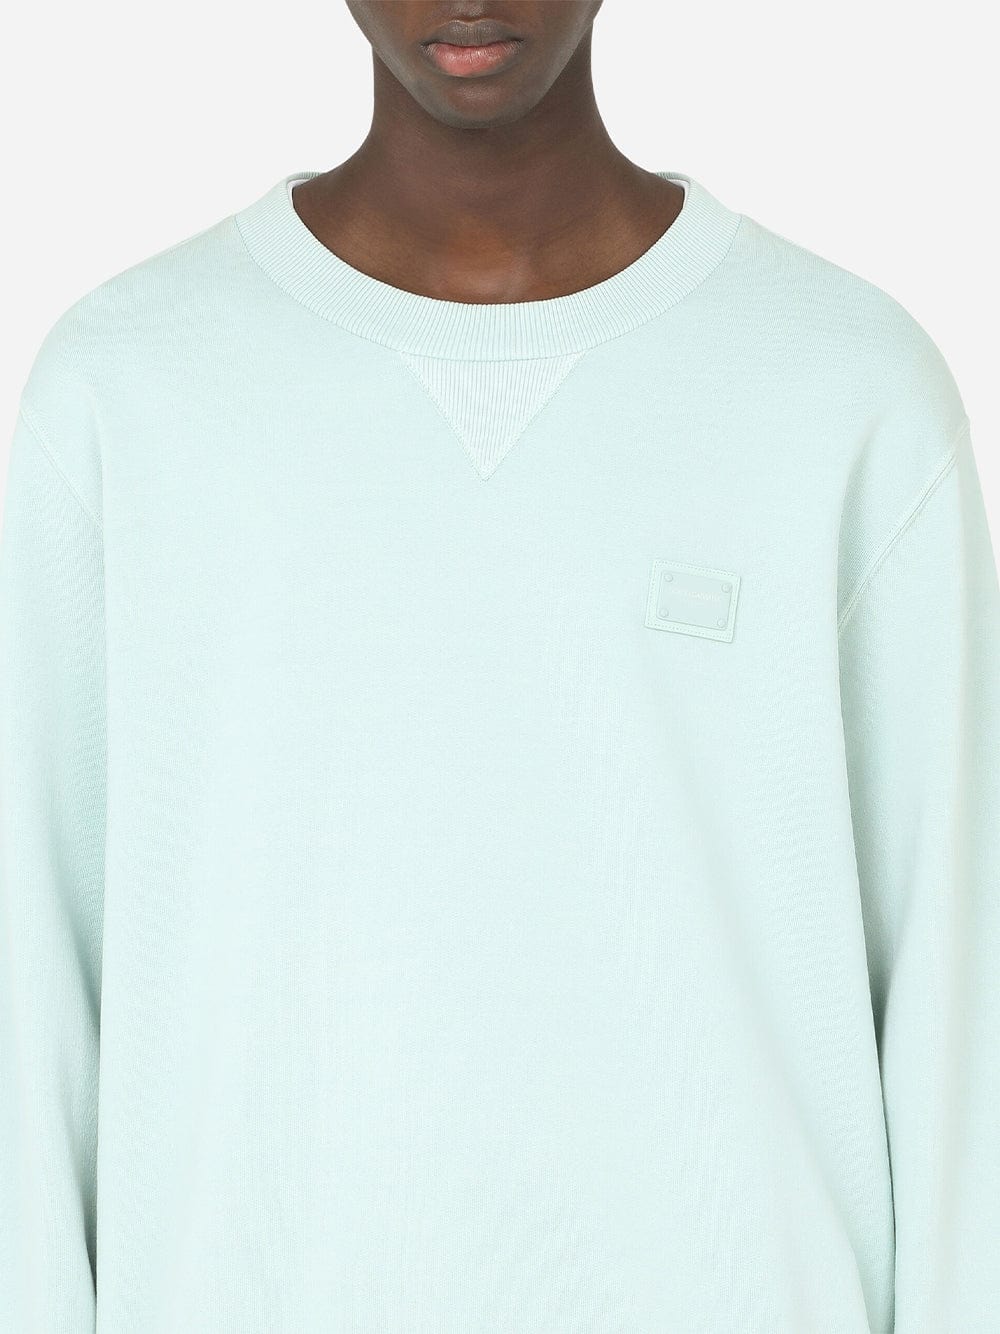 Dolce & Gabbana Branded Tag Jersey Sweatshirt